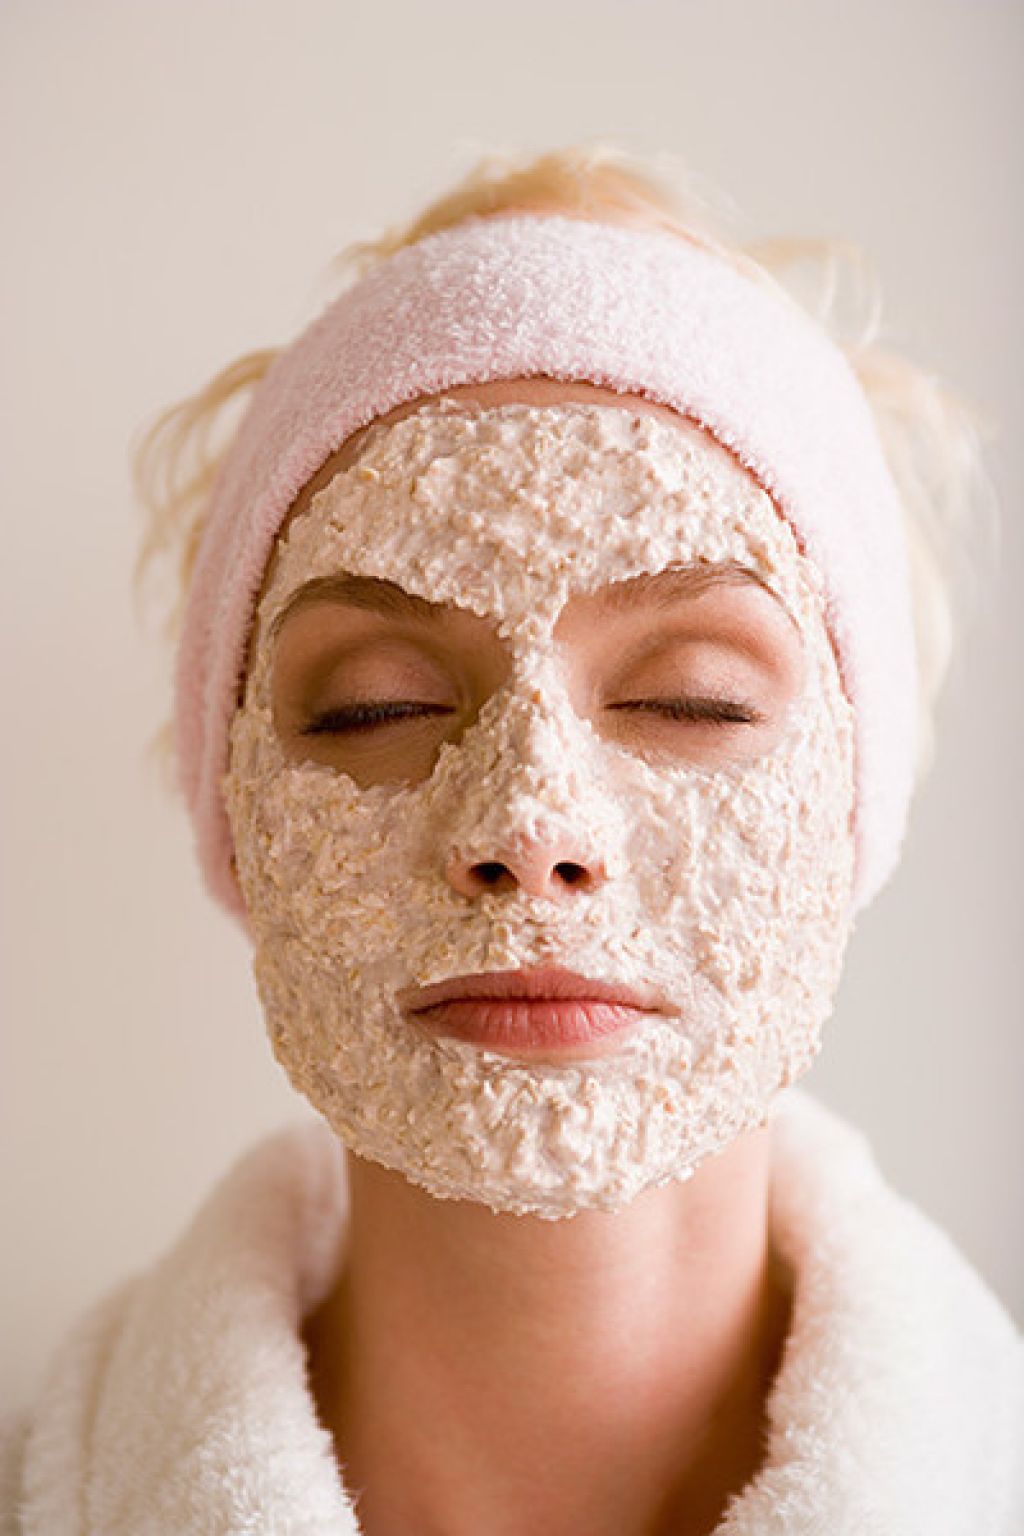 Рисовая маска для лица от морщин. Маска для лица. Майки лицо. М̆̈ӑ̈с̆̈к̆̈й̈ д̆̈л̆̈я̆̈ л̆̈й̈ц̆̈ӑ̈. Домашние маски для лица.